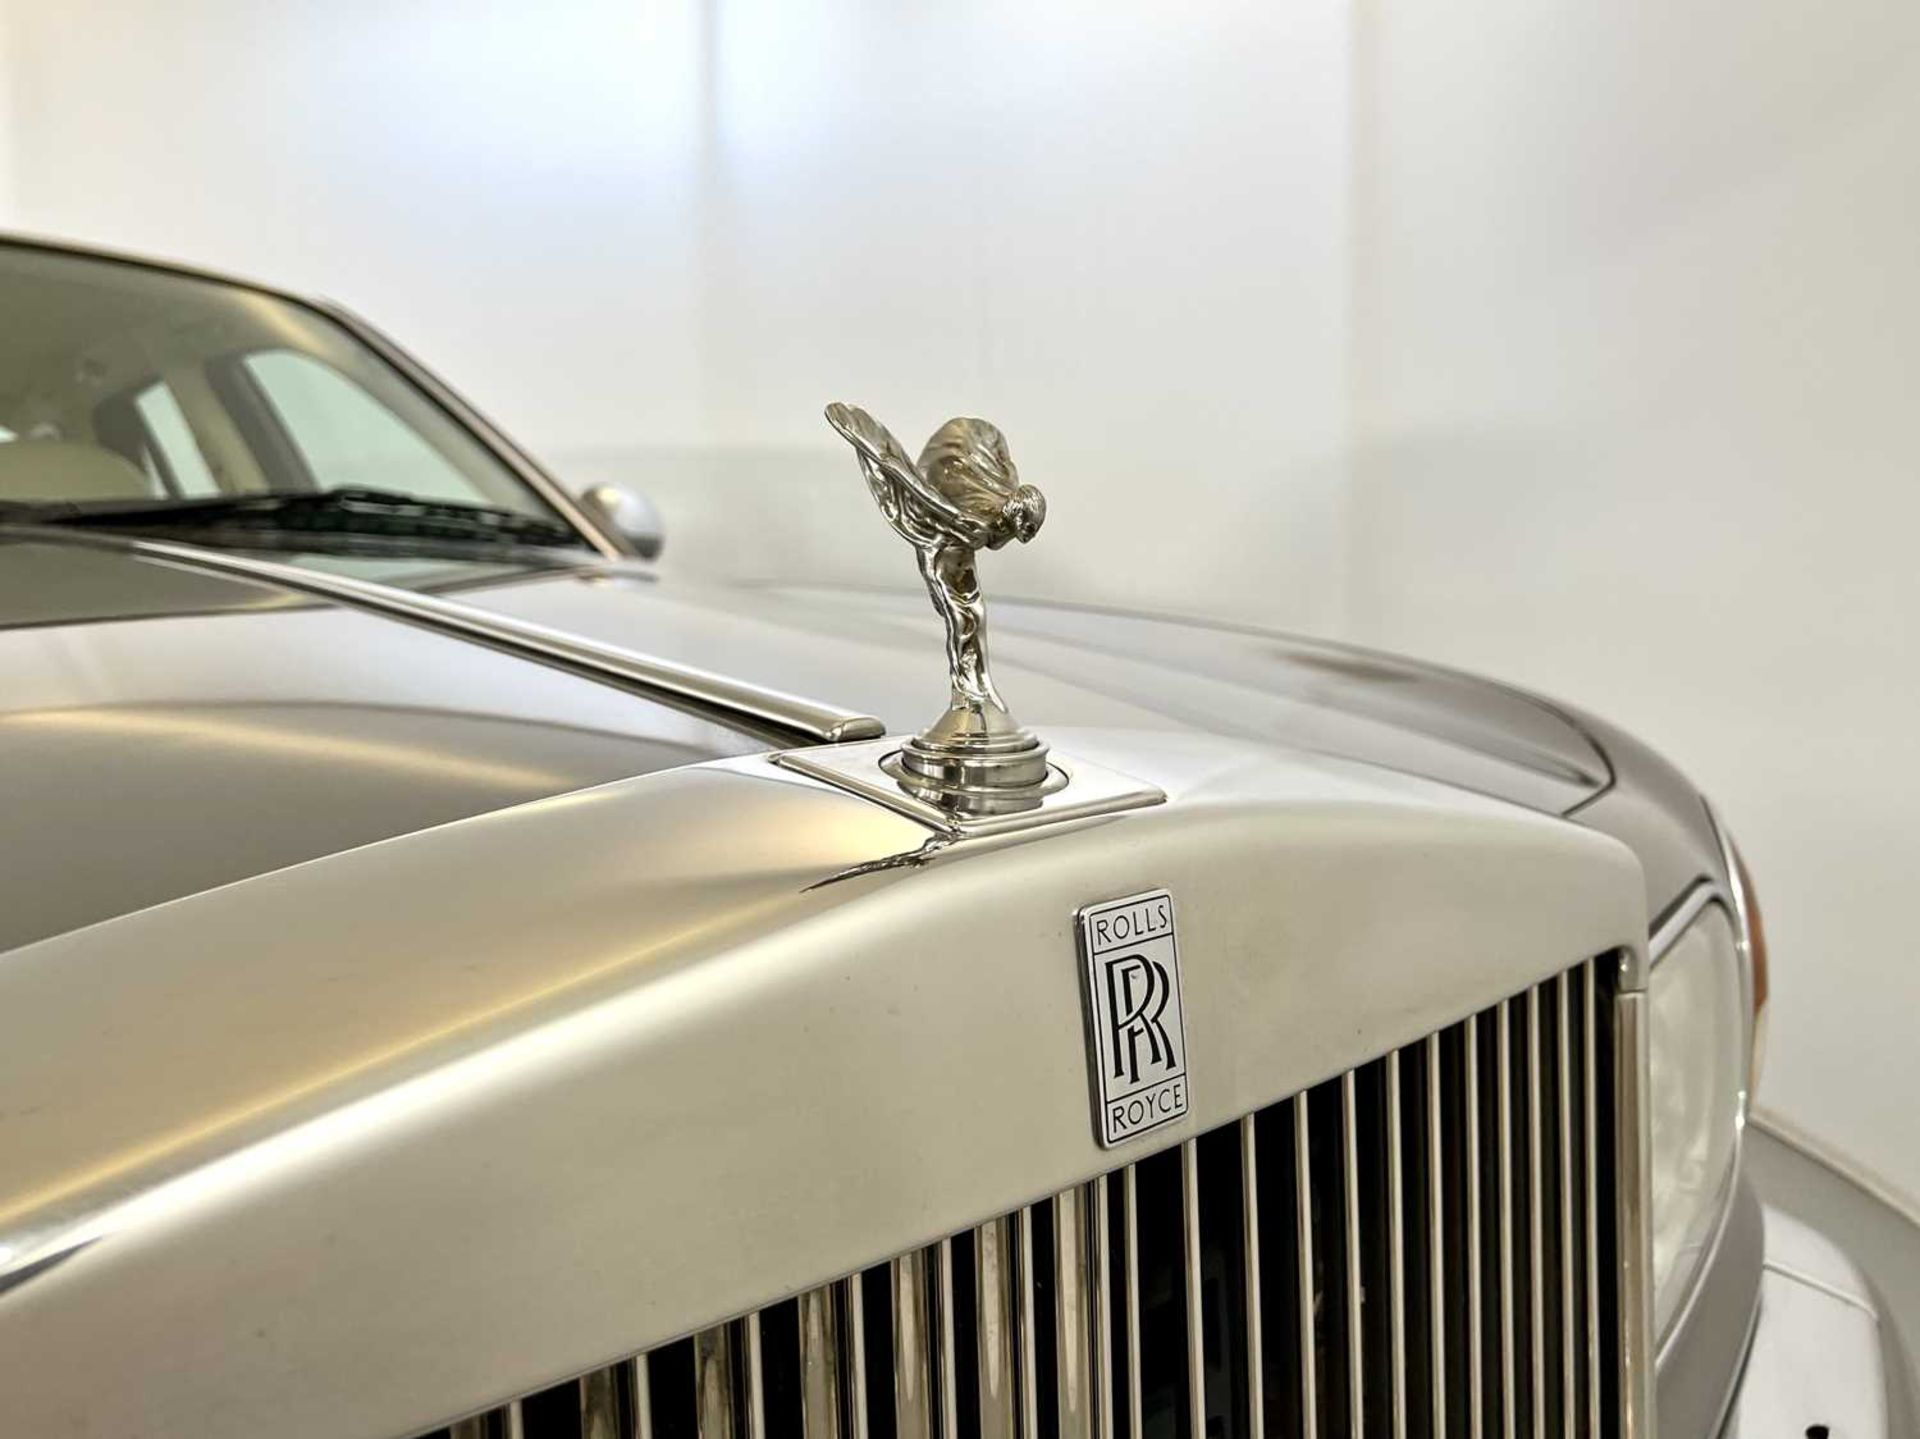 1999 Rolls Royce Silver Seraph - Image 13 of 38